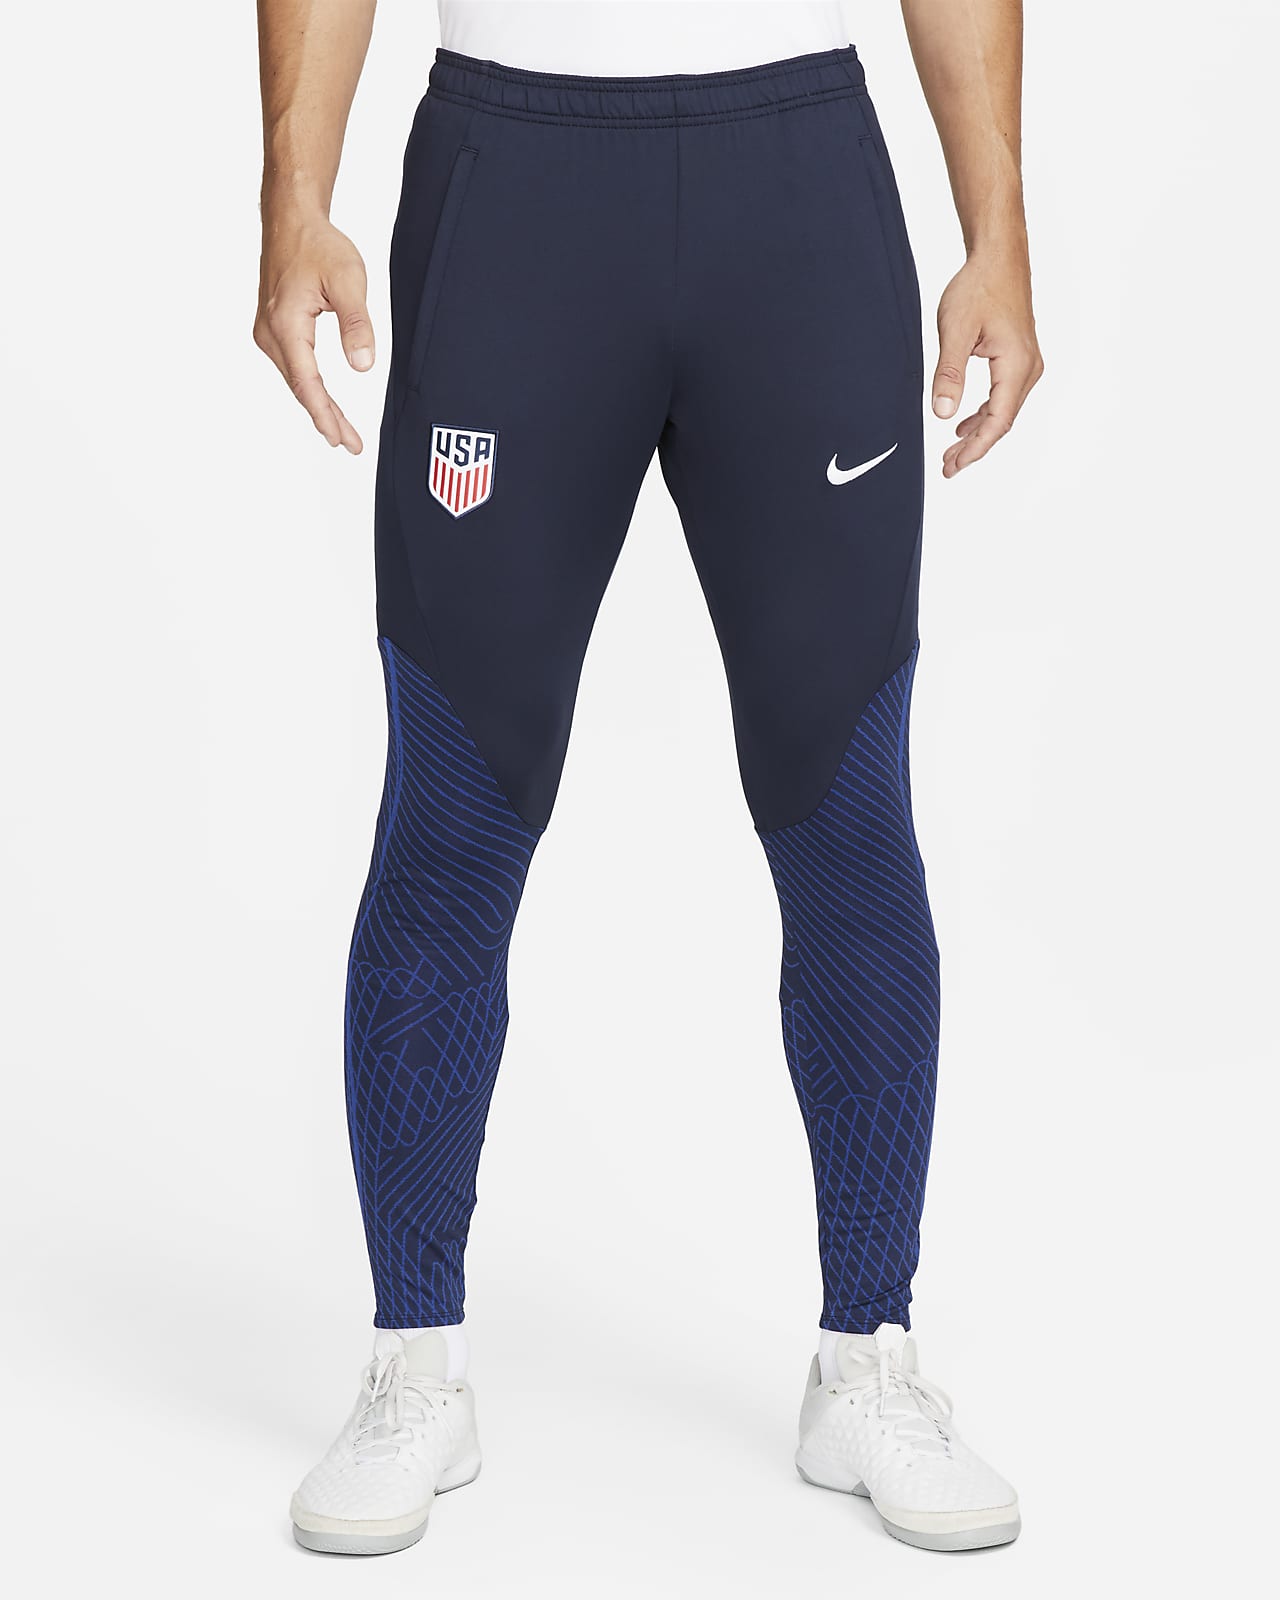 correct Zeeman Premisse U.S. Strike Men's Nike Dri-FIT Knit Soccer Pants. Nike.com